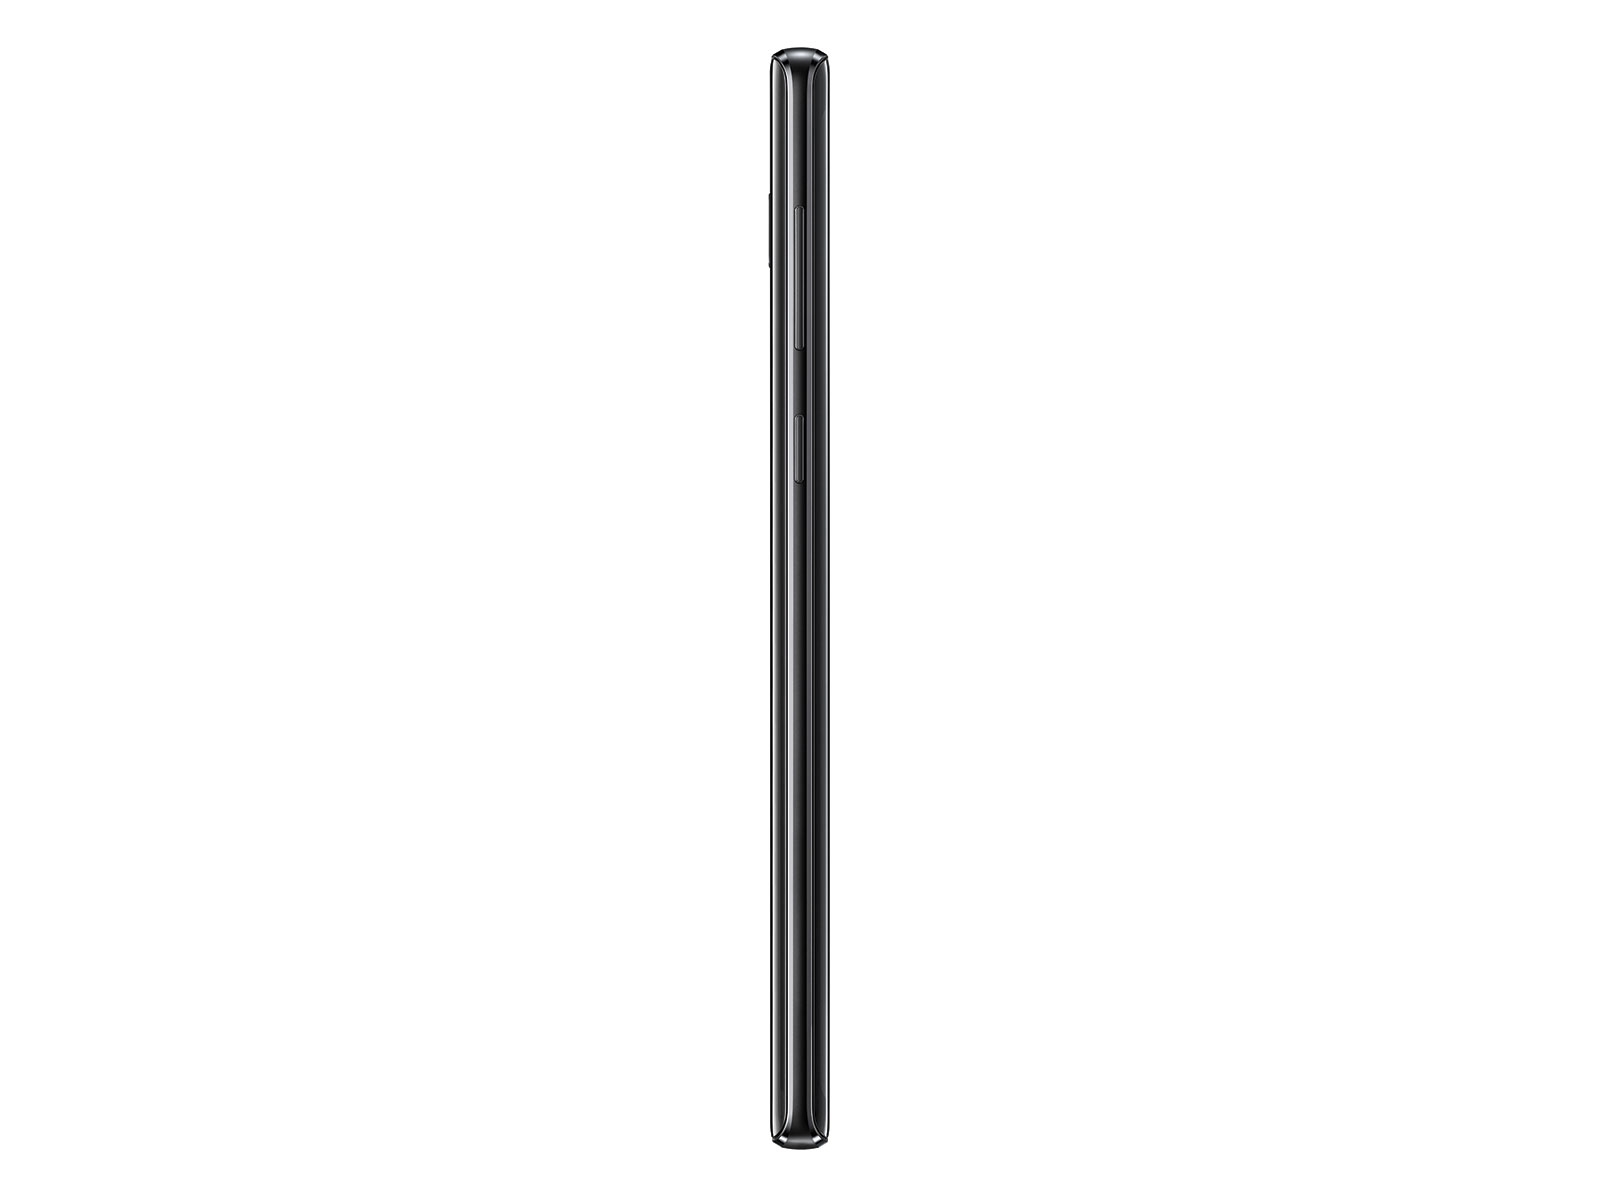 Samsung Galaxy Note9 128 GB (Unlocked) : Midnight Black | Samsung US